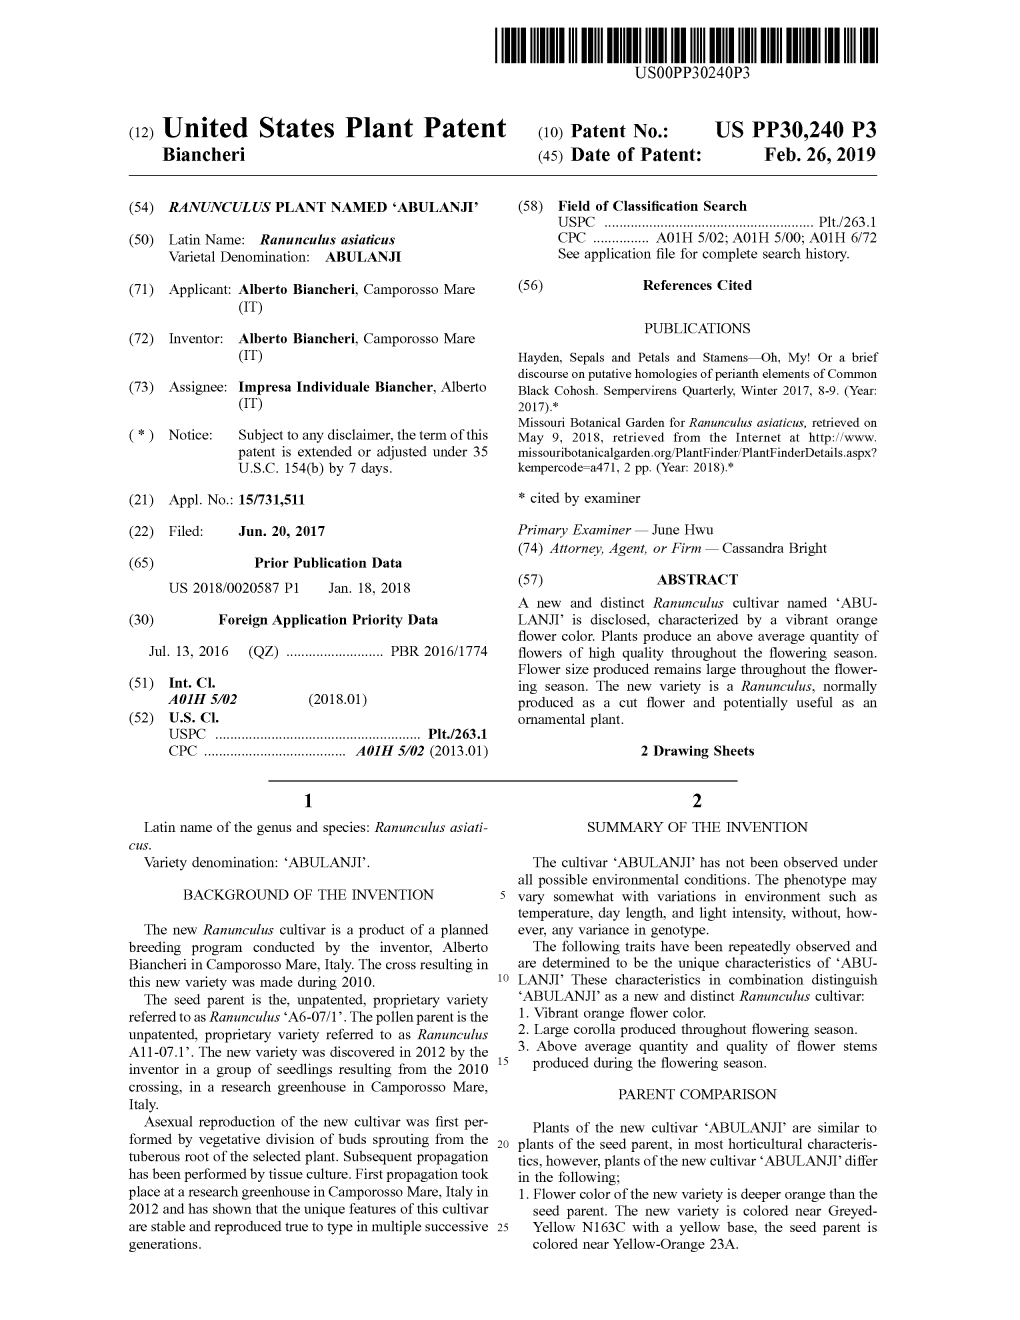 ( 12 ) United States Plant Patent ( 10 ) Patent No . : US PP30 , 240 P3